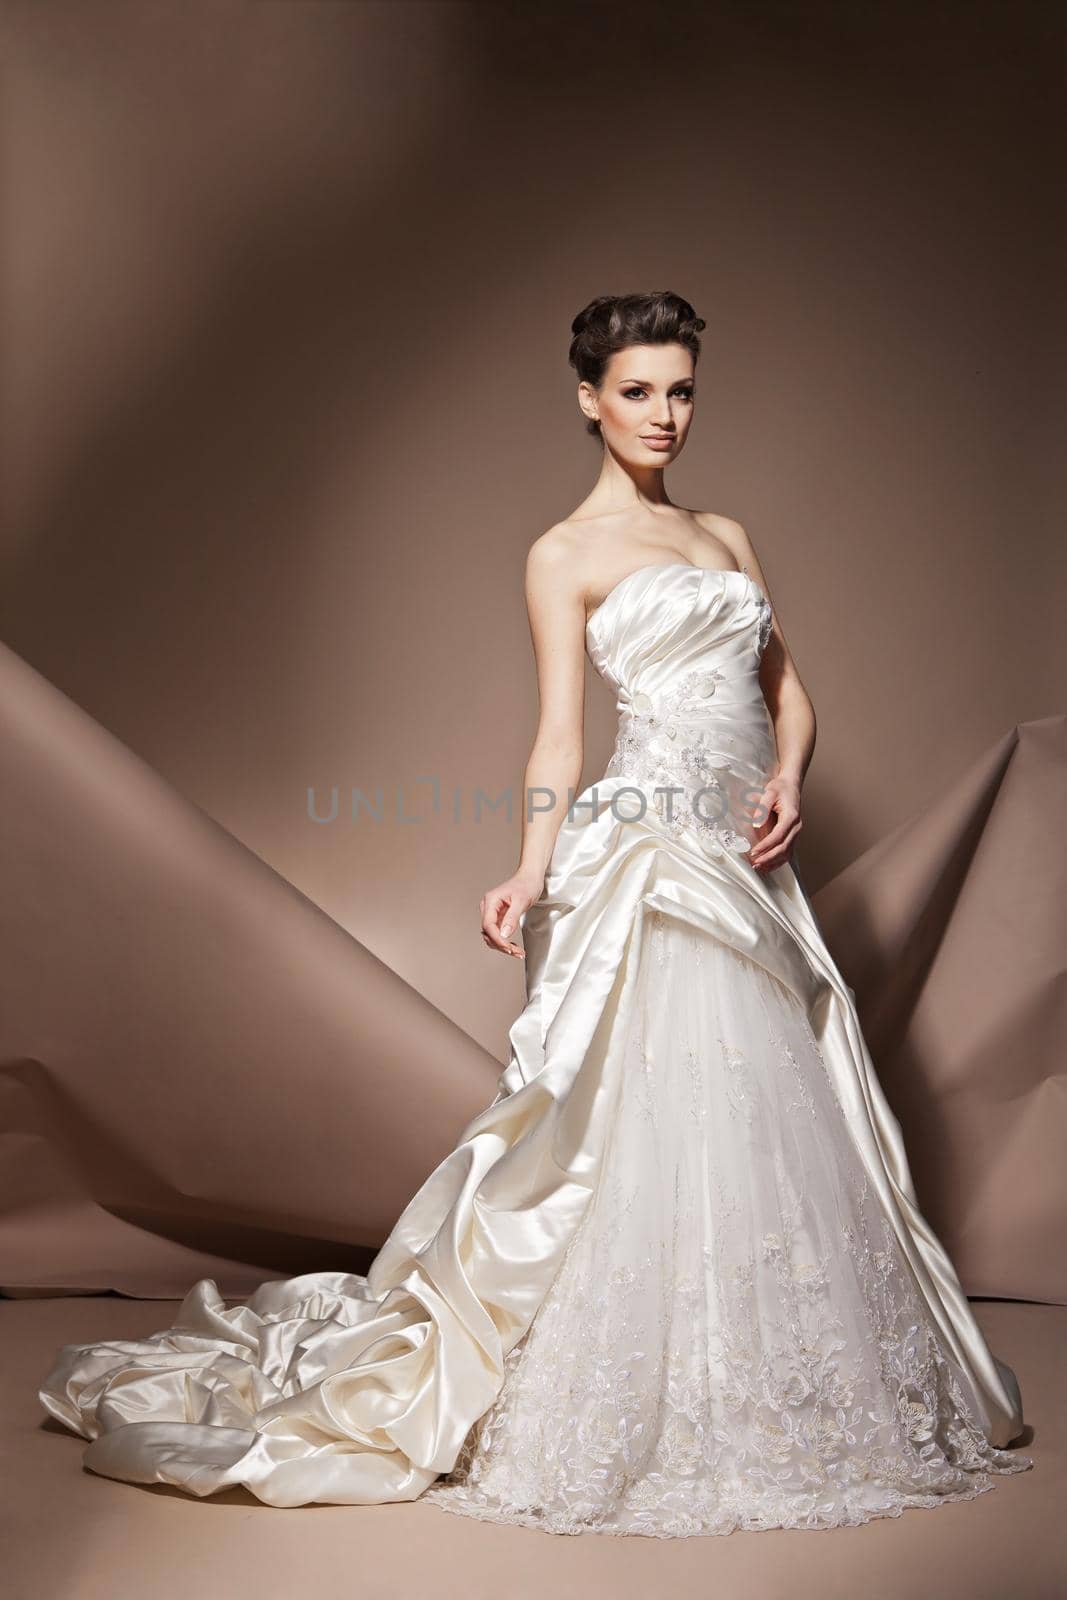 The beautiful young woman posing in a wedding dress